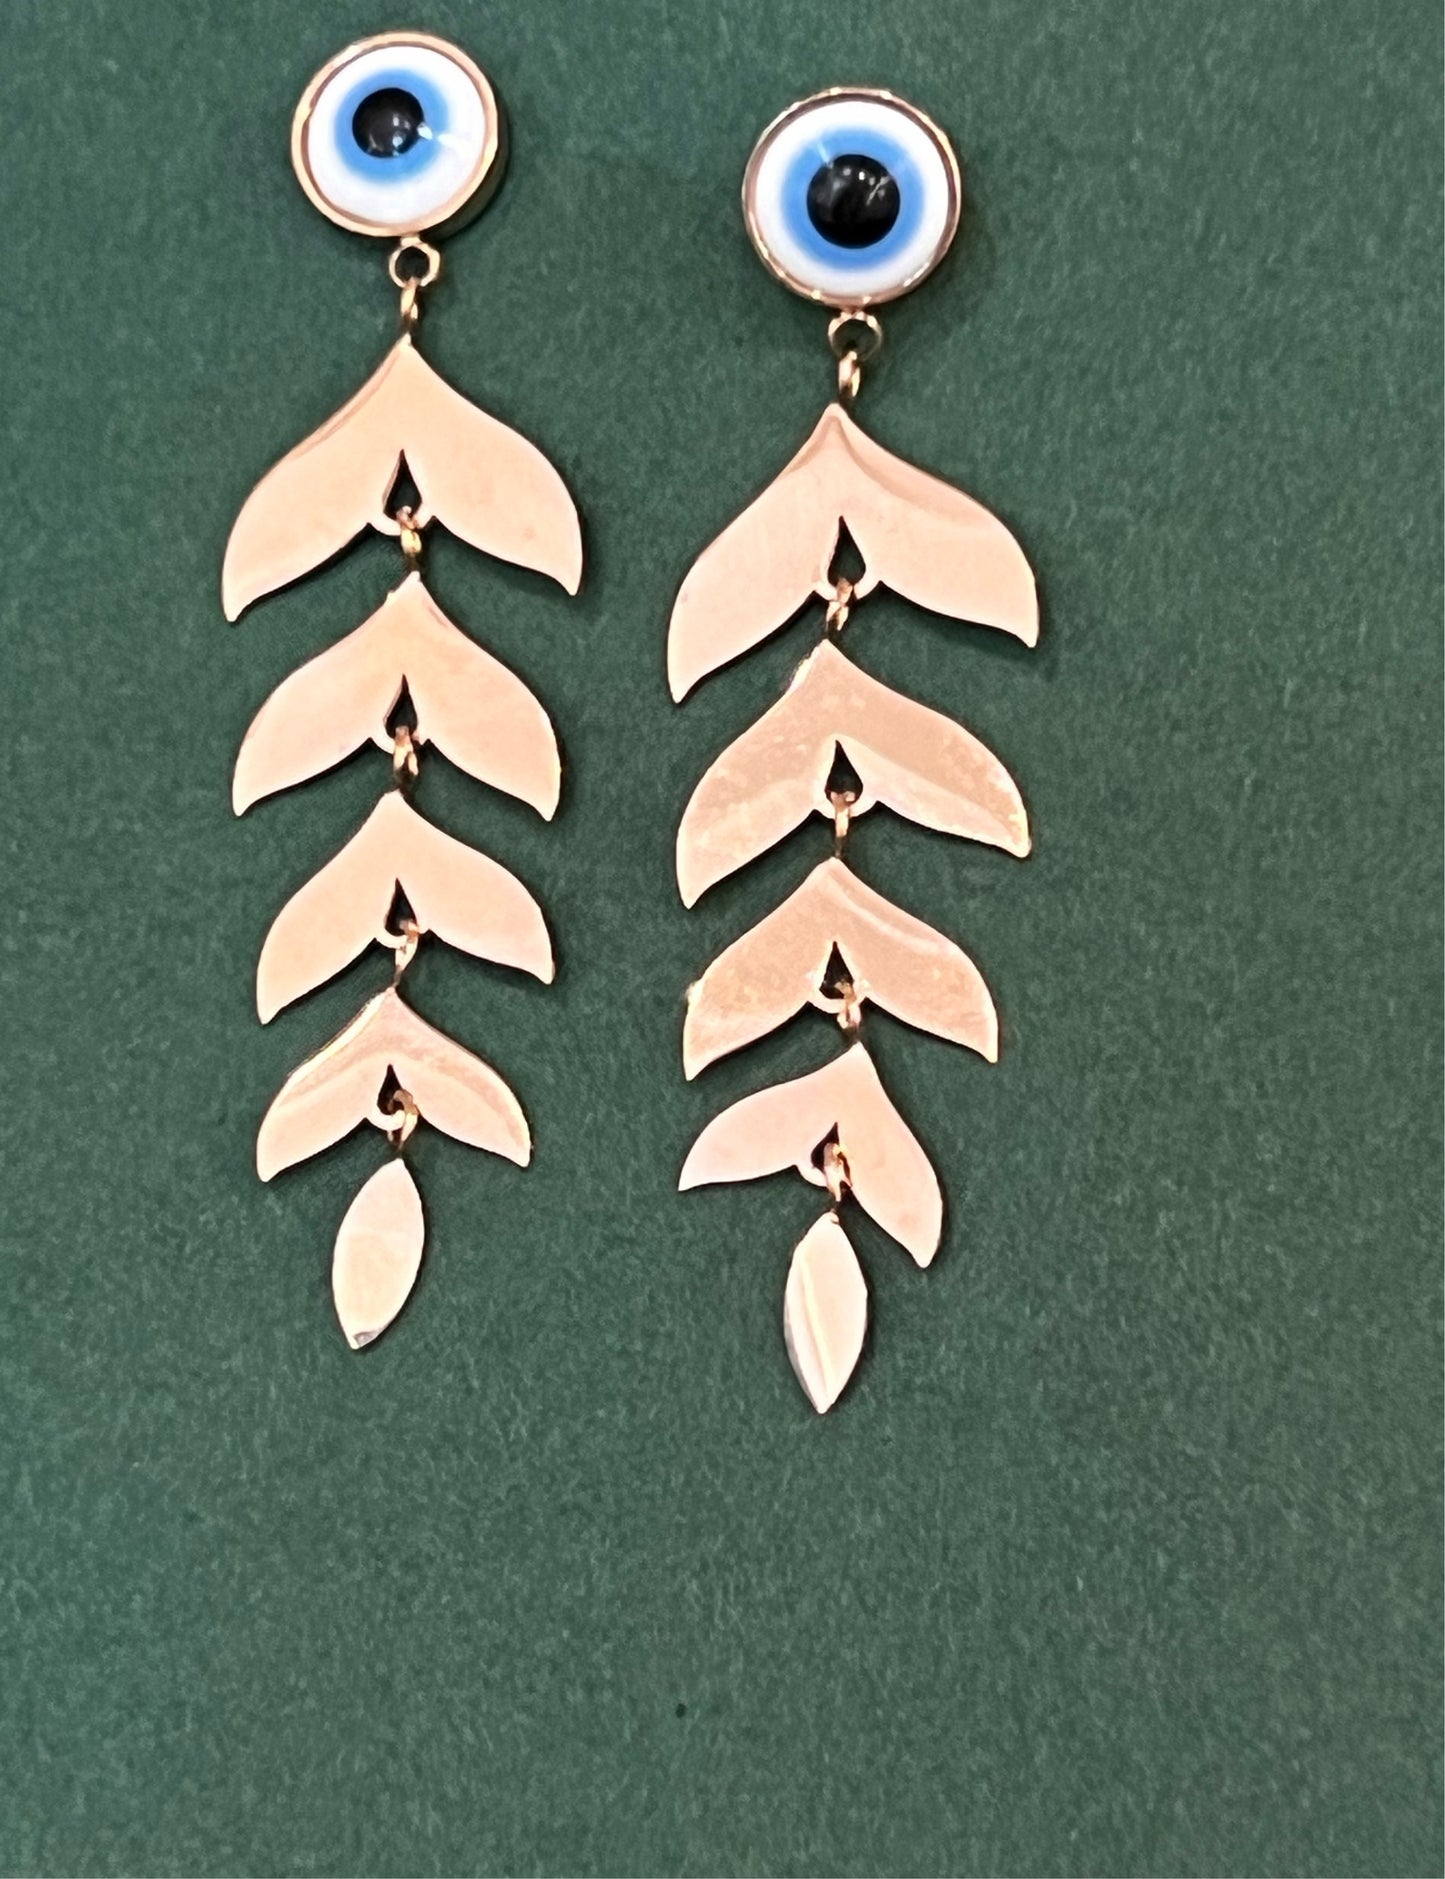 Rose Gold Leaf Earrings